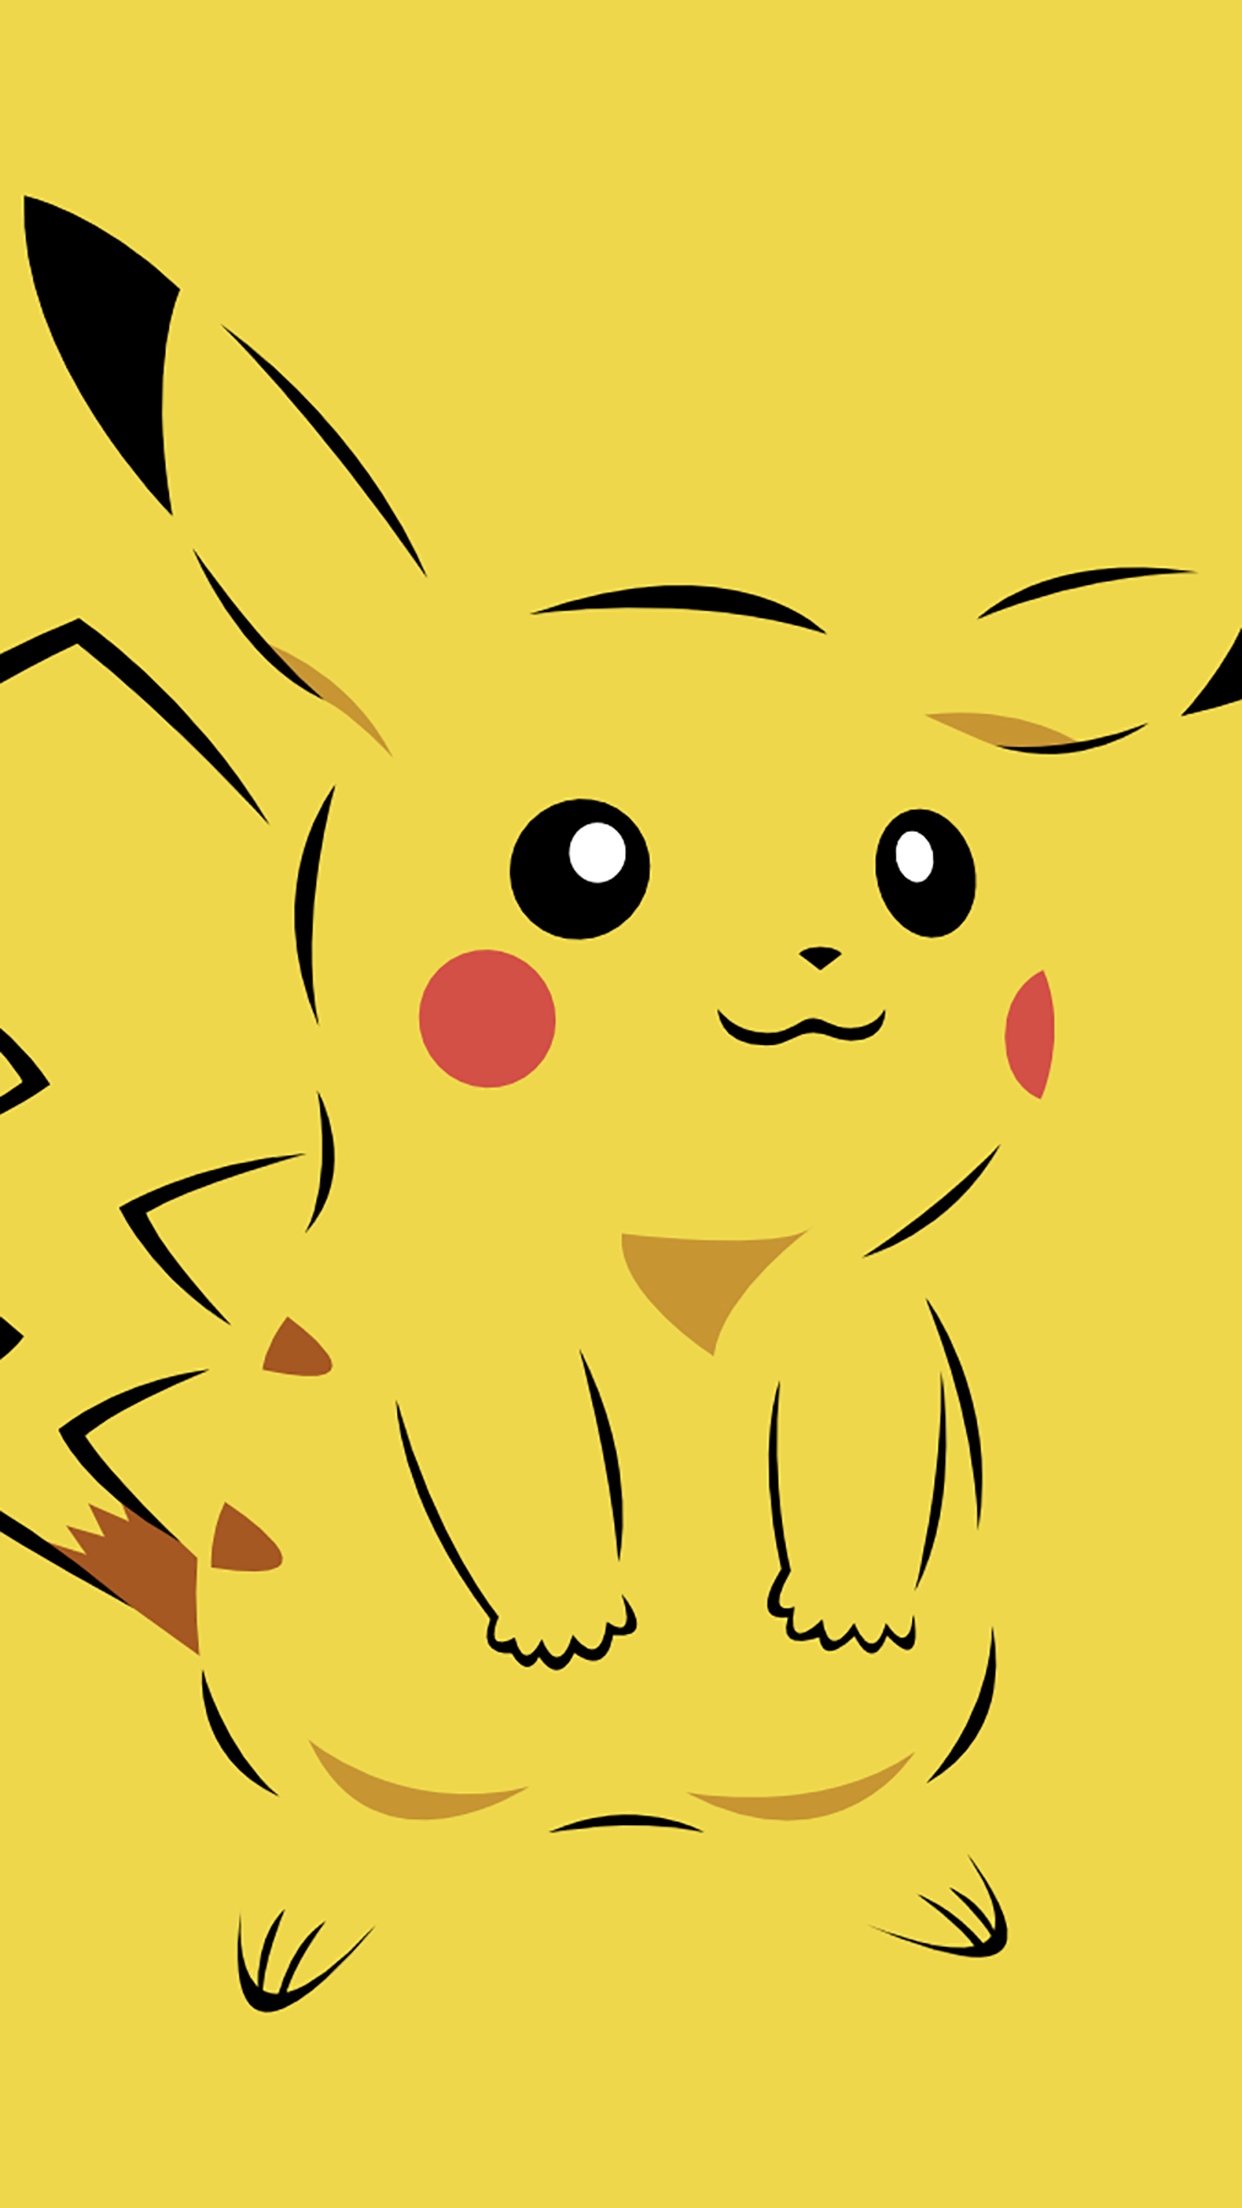 wallpaper de pikachu,yellow,cartoon,facial expression,head,illustration